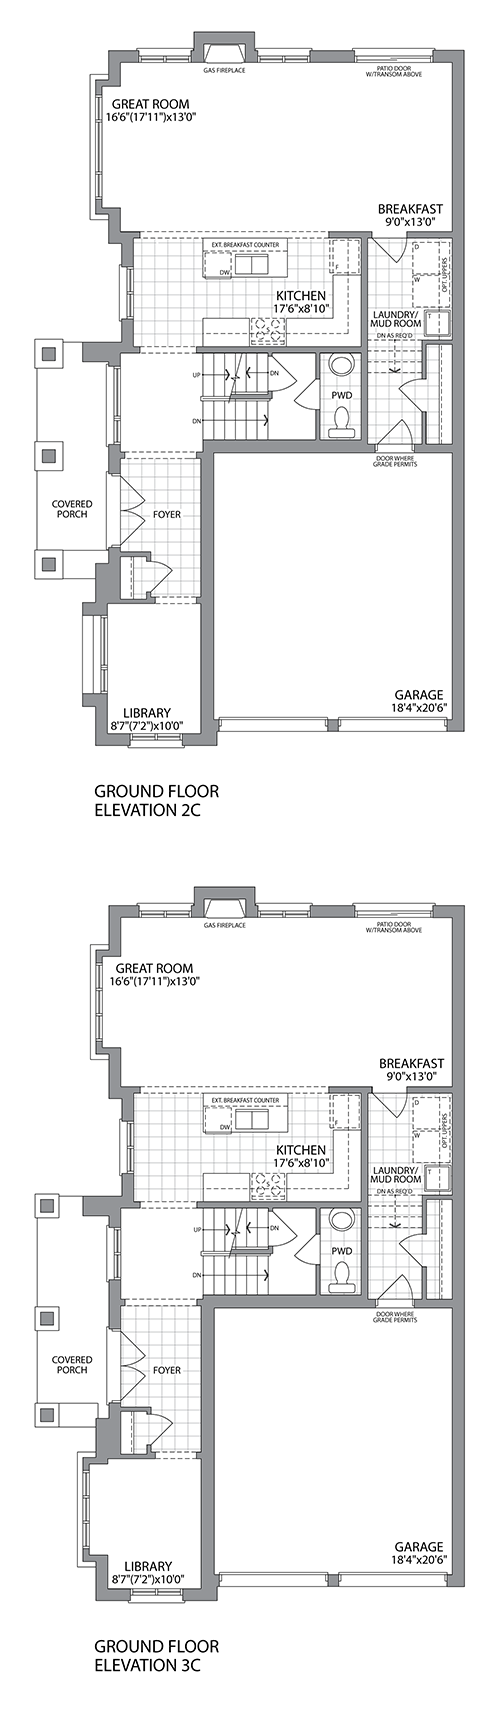 The HILLCREST (LOT N1) Ground Floor